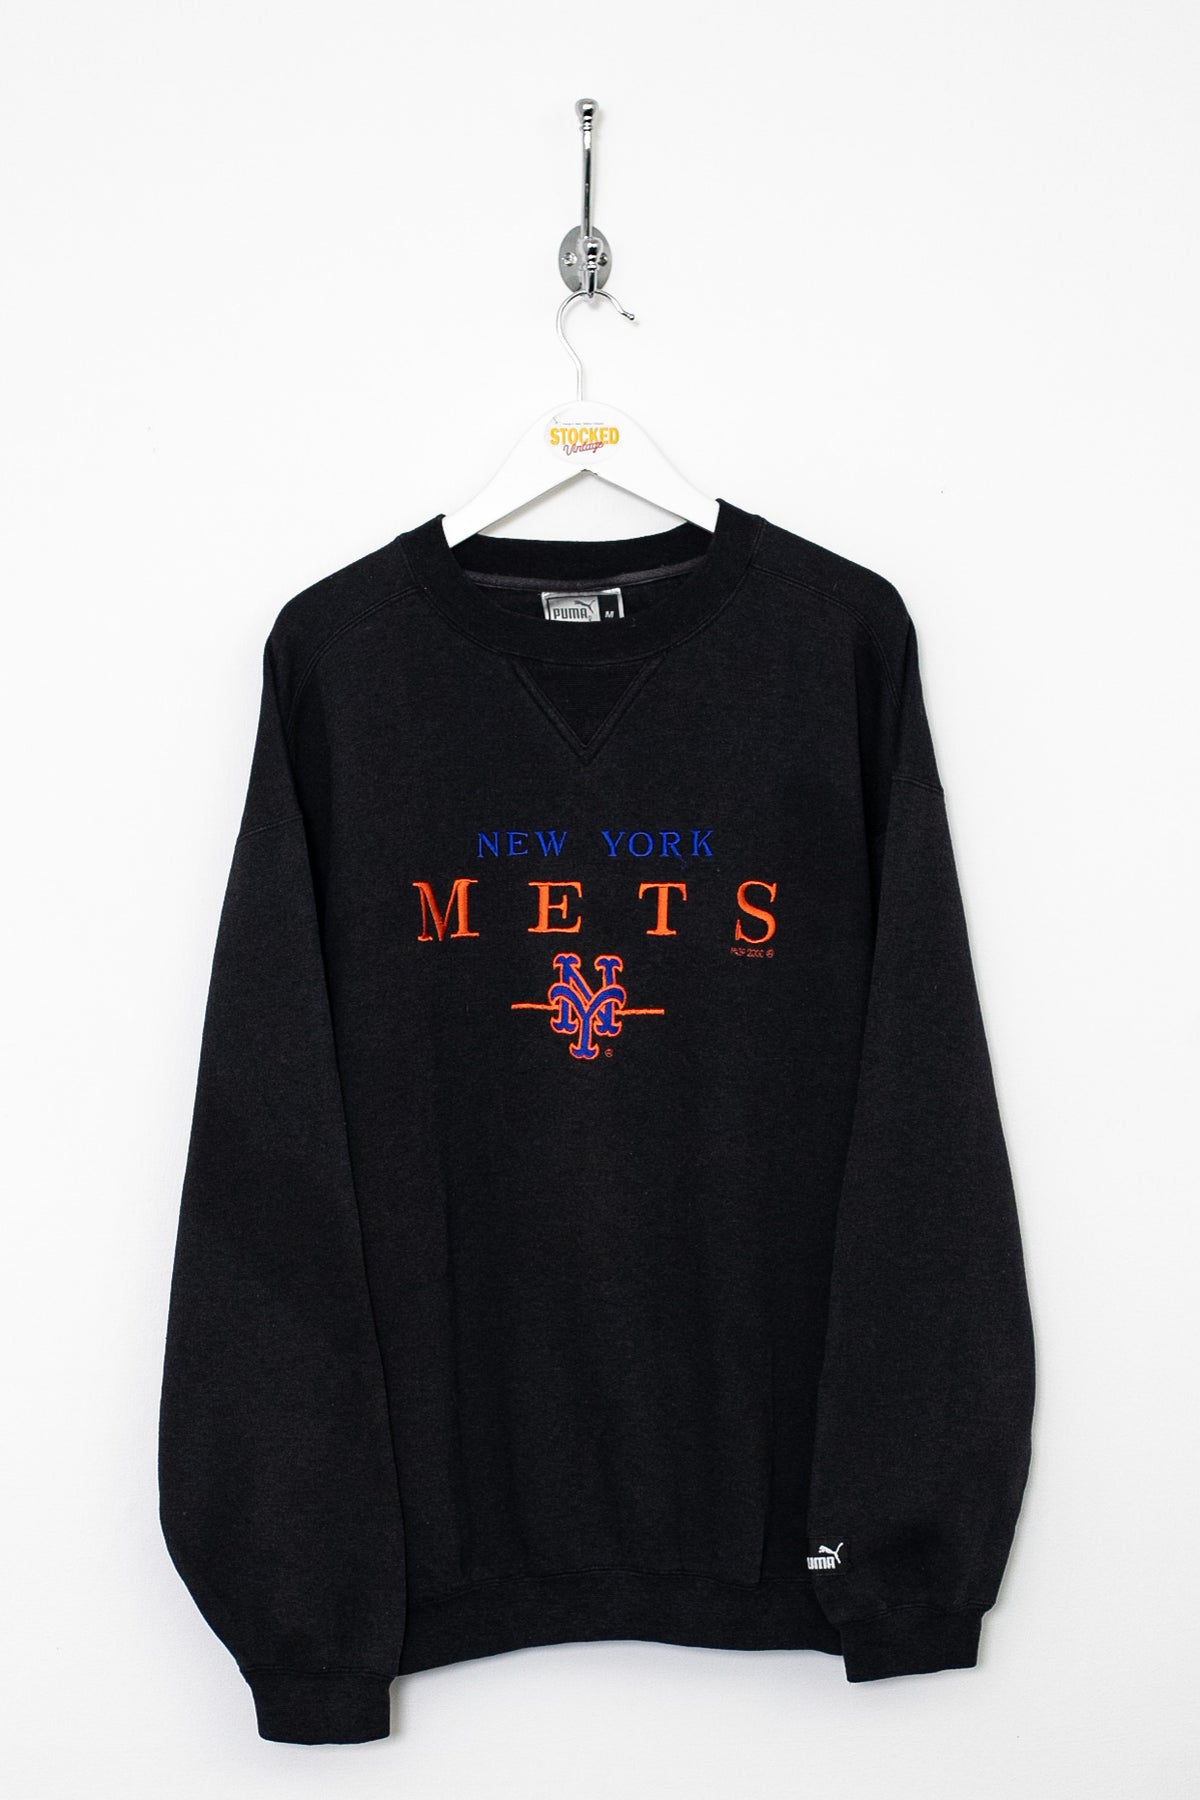 90s MLB New York Mets Sweatshirt (M)